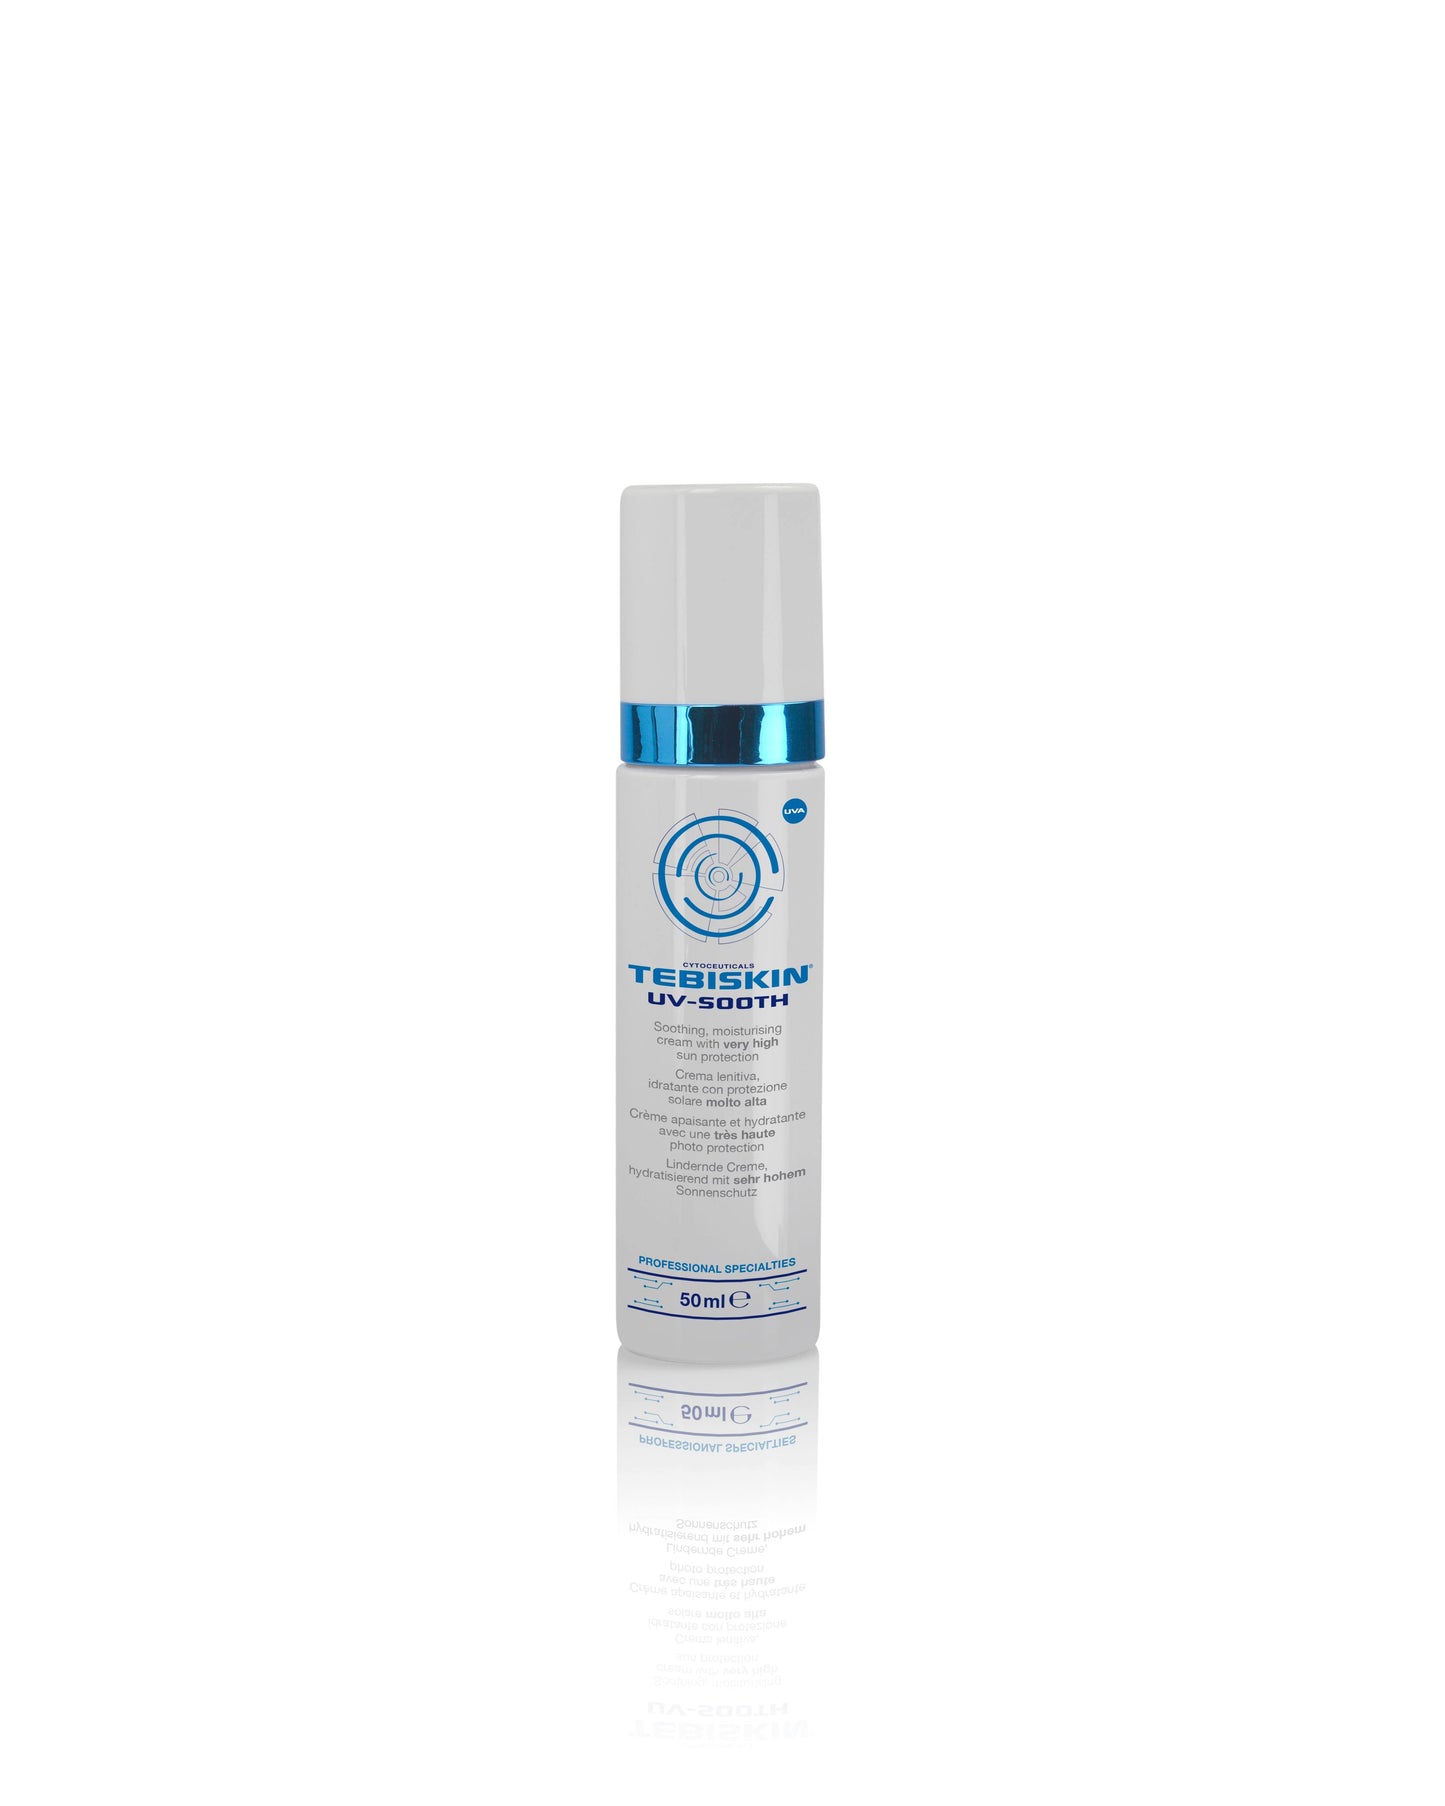 TEBISKIN® OSK special cream for oily, acne-prone skin